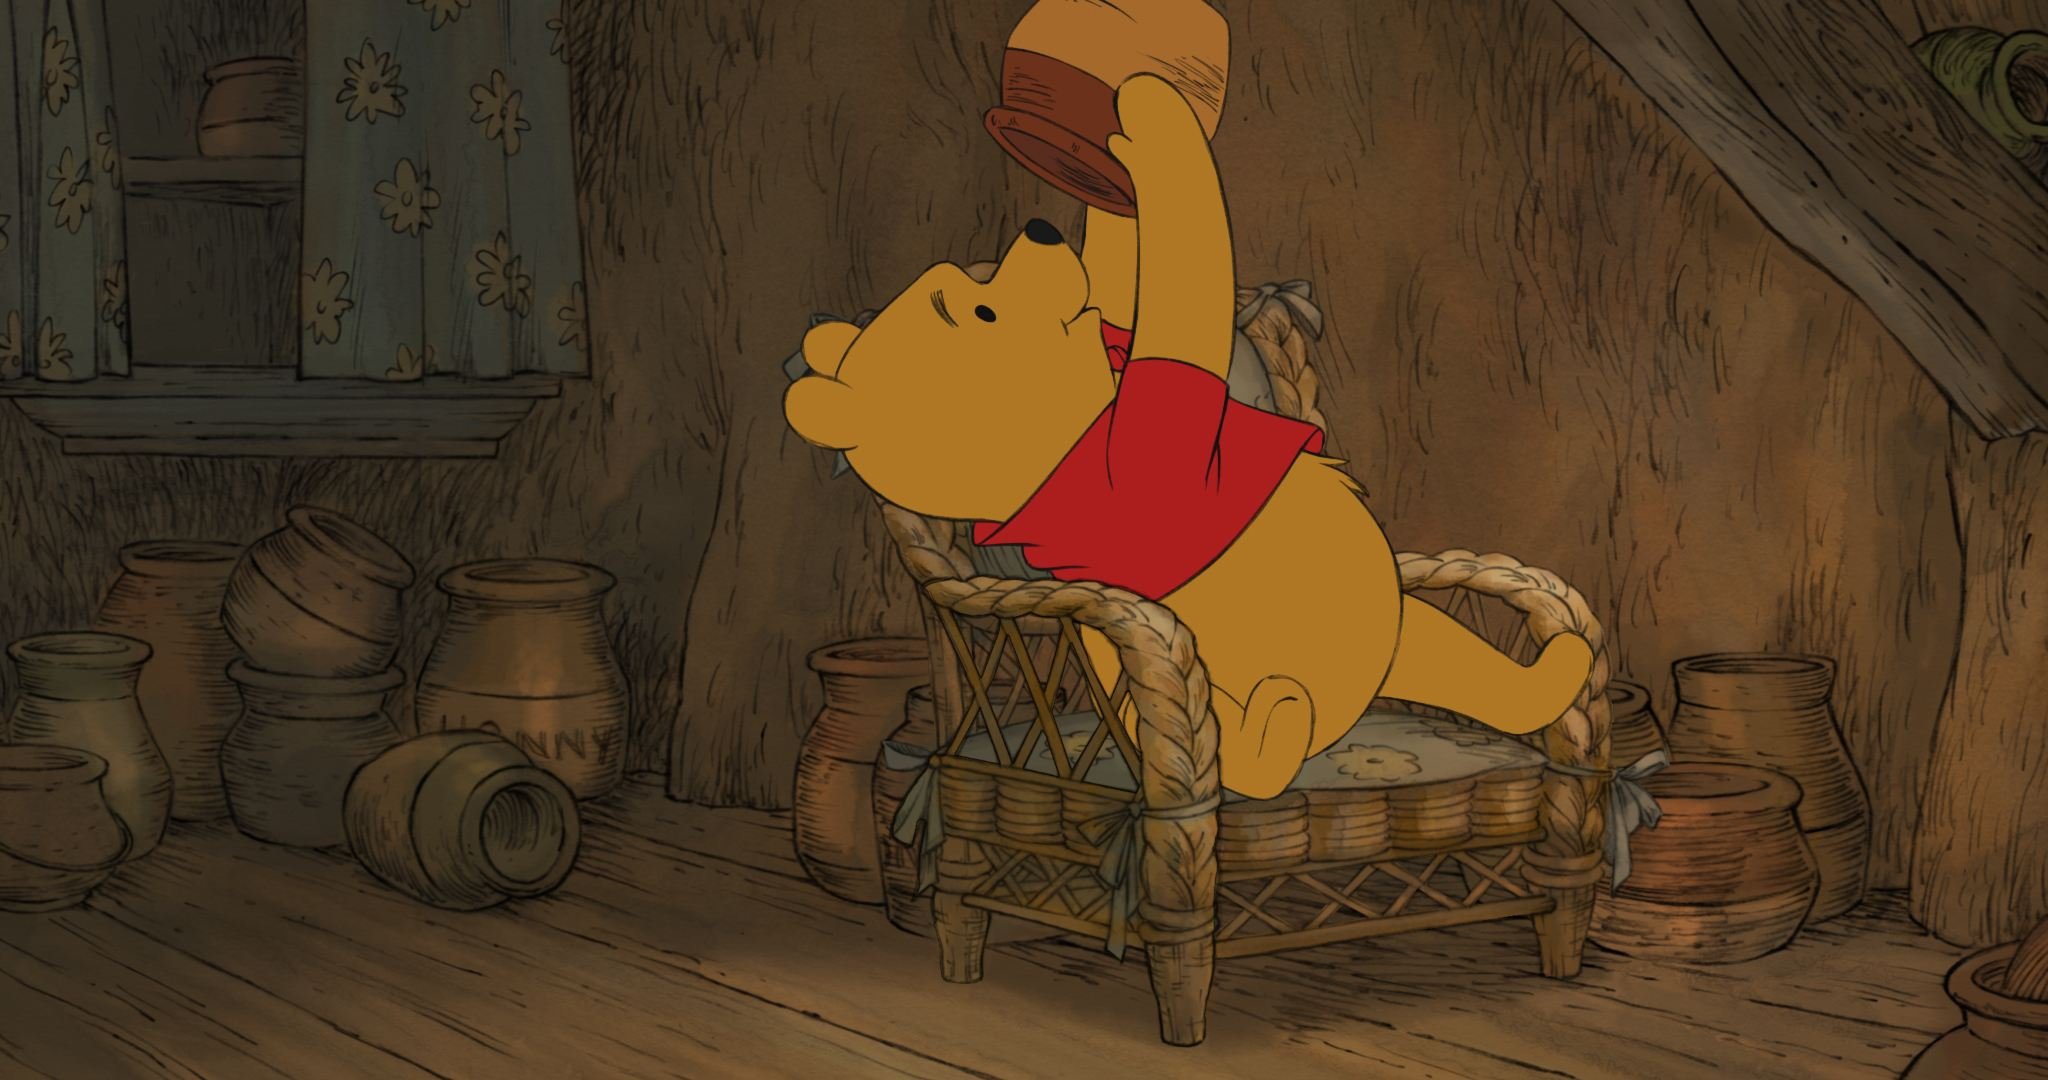 Winnie the pooh adventures. Винни пух (Дисней) 1988. Медвежонок Винни 1988. Винни пух 2011.